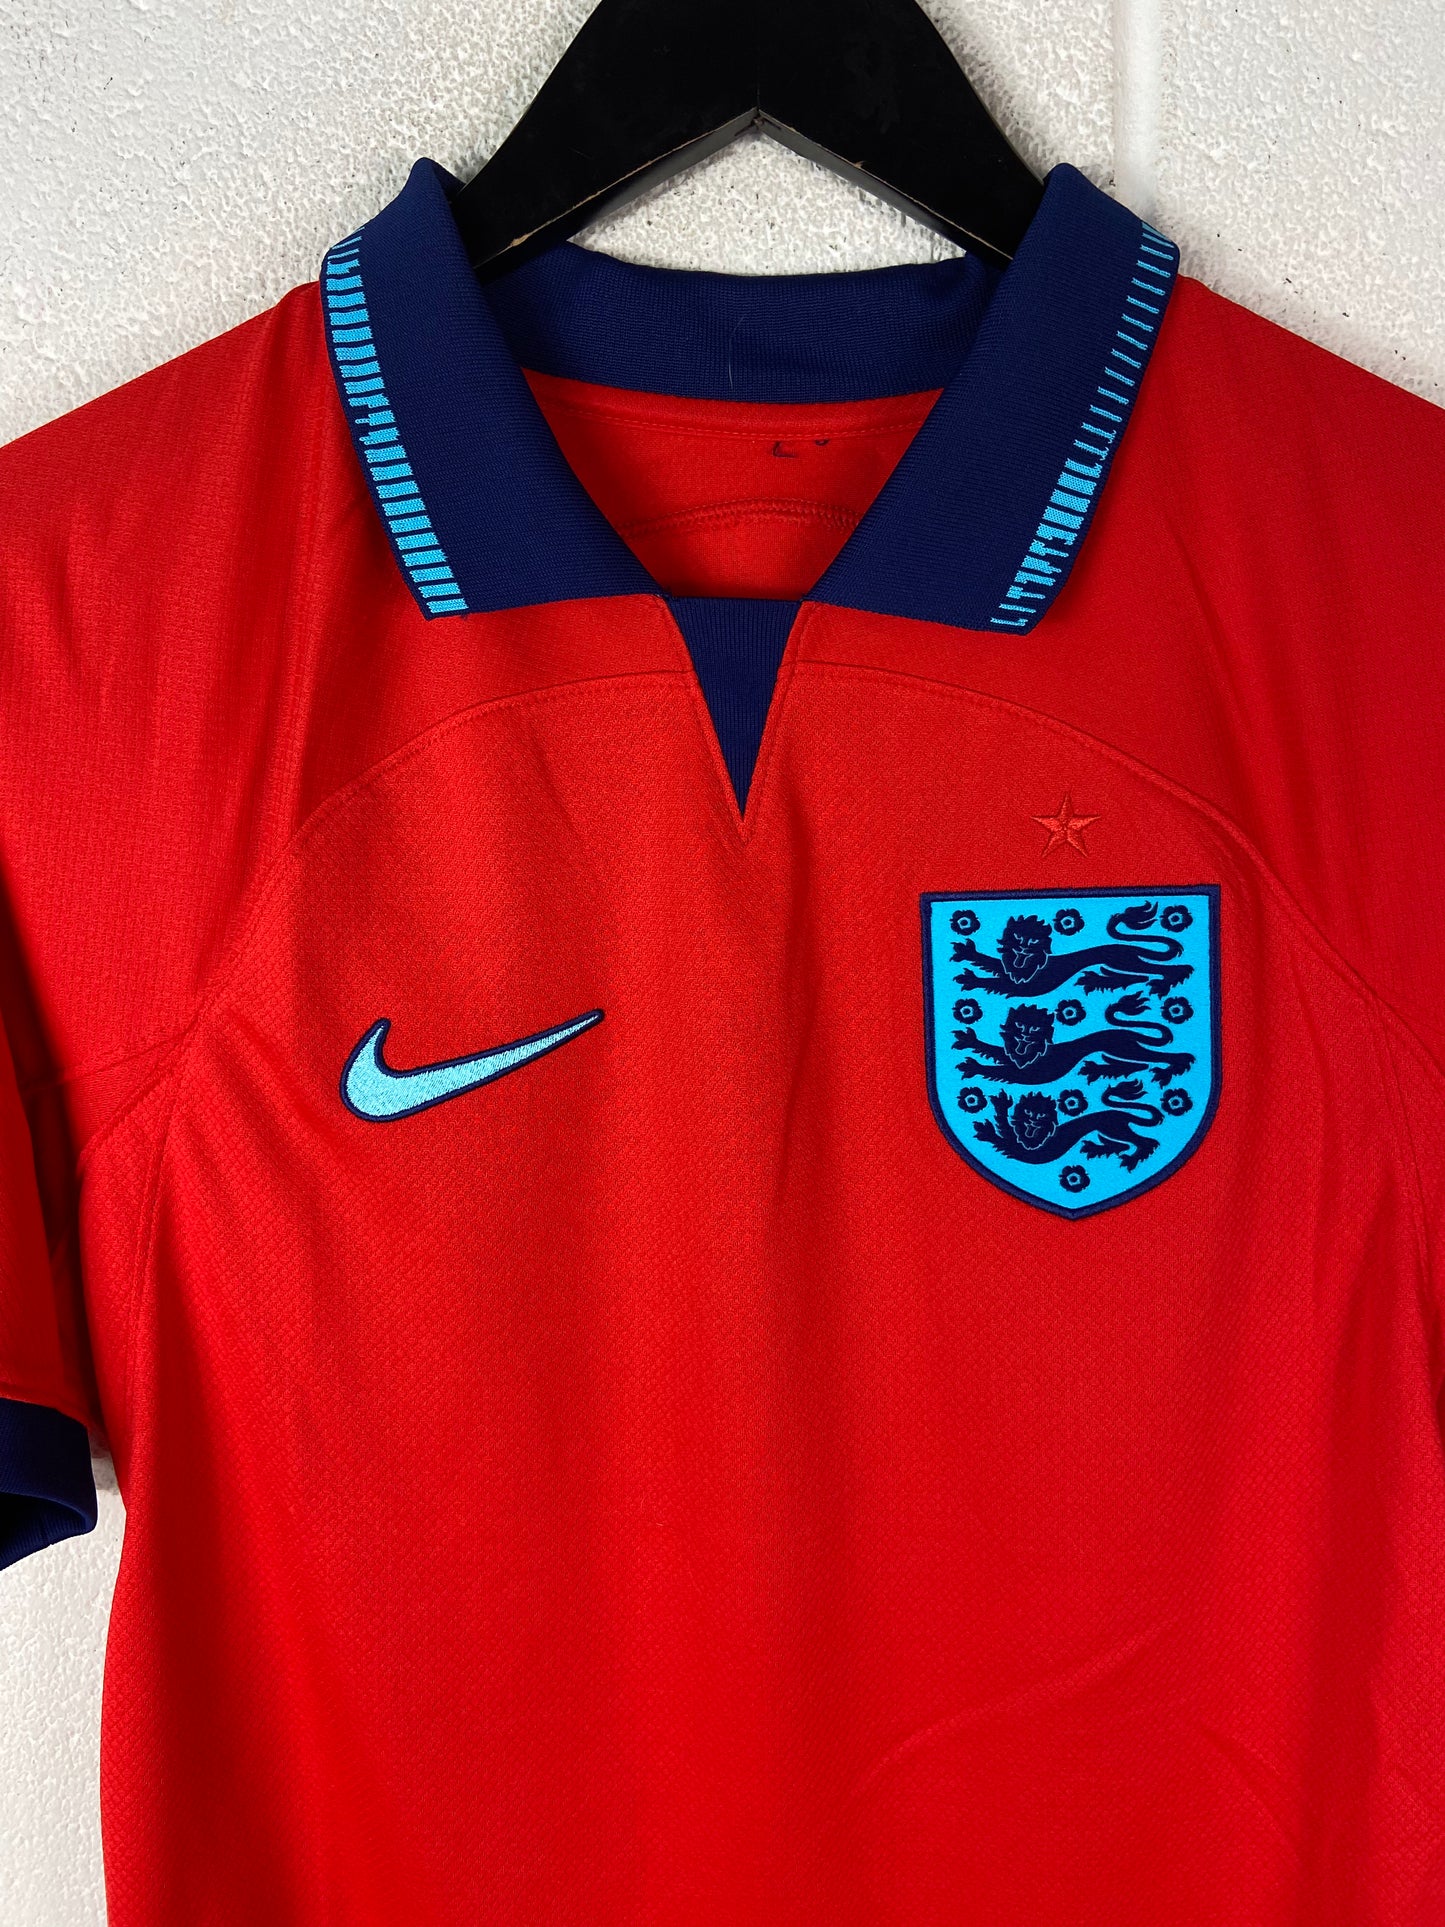 Nike England World Cup Away Soccer Jersey Sz S